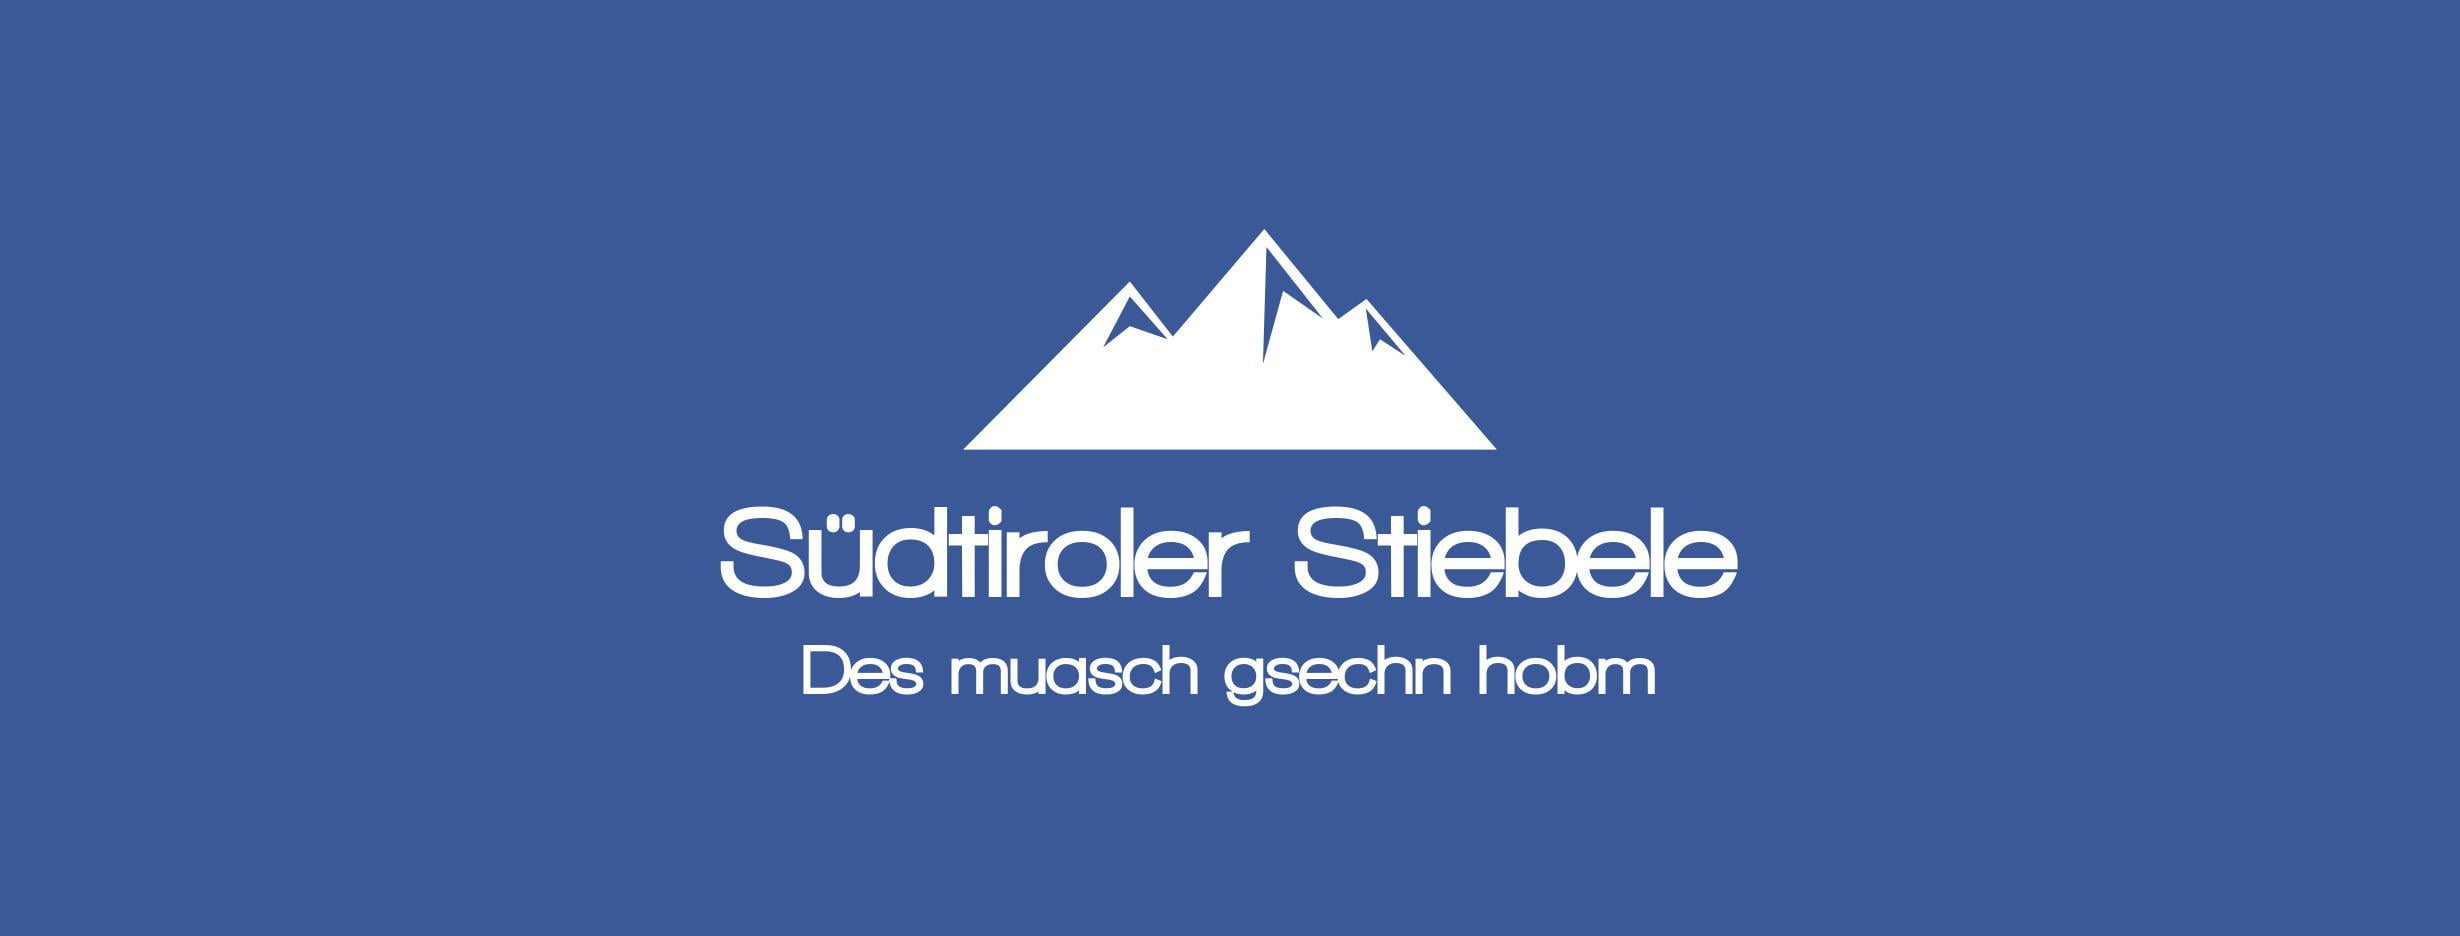 Südtiroler Stiebele